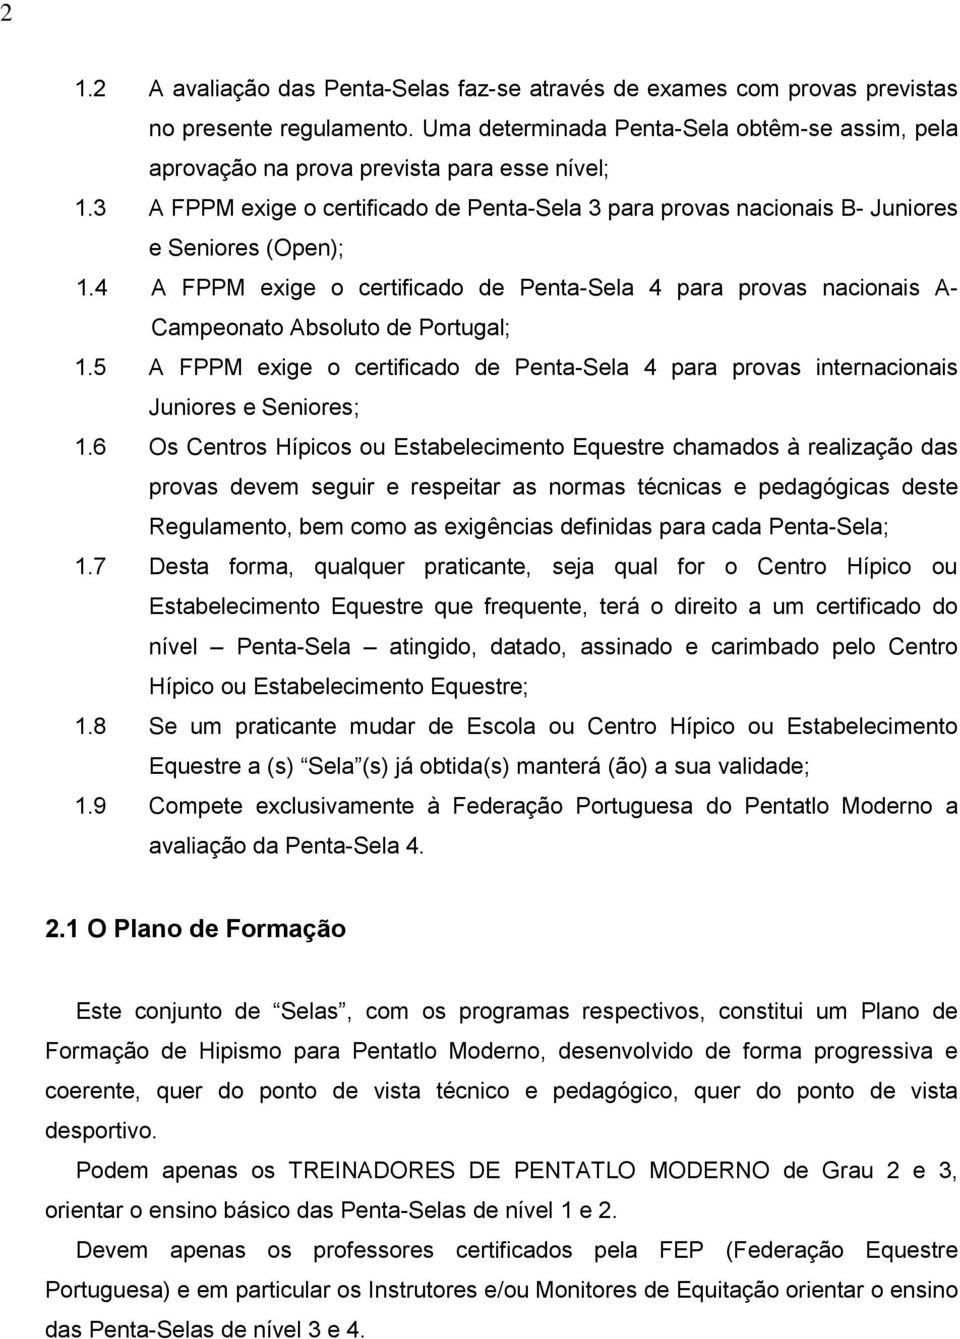 4 A FPPM exige o certificado de Penta-Sela 4 para provas nacionais A- Campeonato Absoluto de Portugal; 1.5 A FPPM exige o certificado de Penta-Sela 4 para provas internacionais Juniores e Seniores; 1.